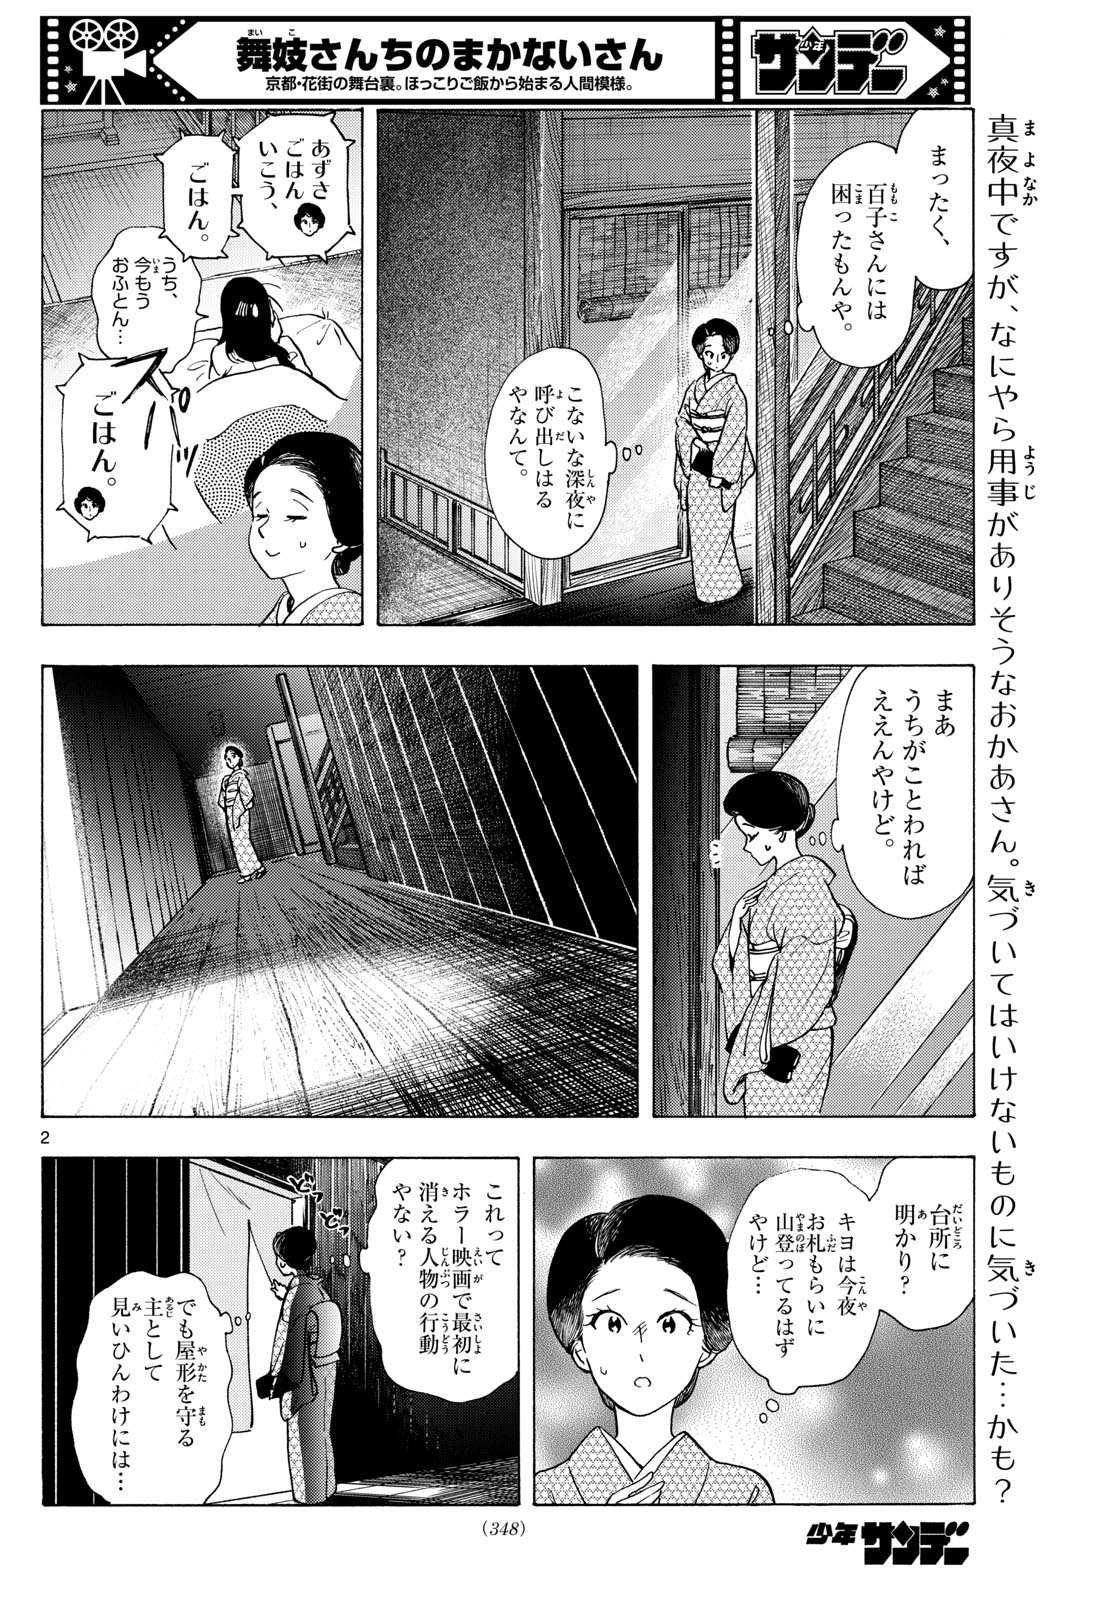 Maiko-san Chi no Makanai-san - Chapter 298 - Page 2